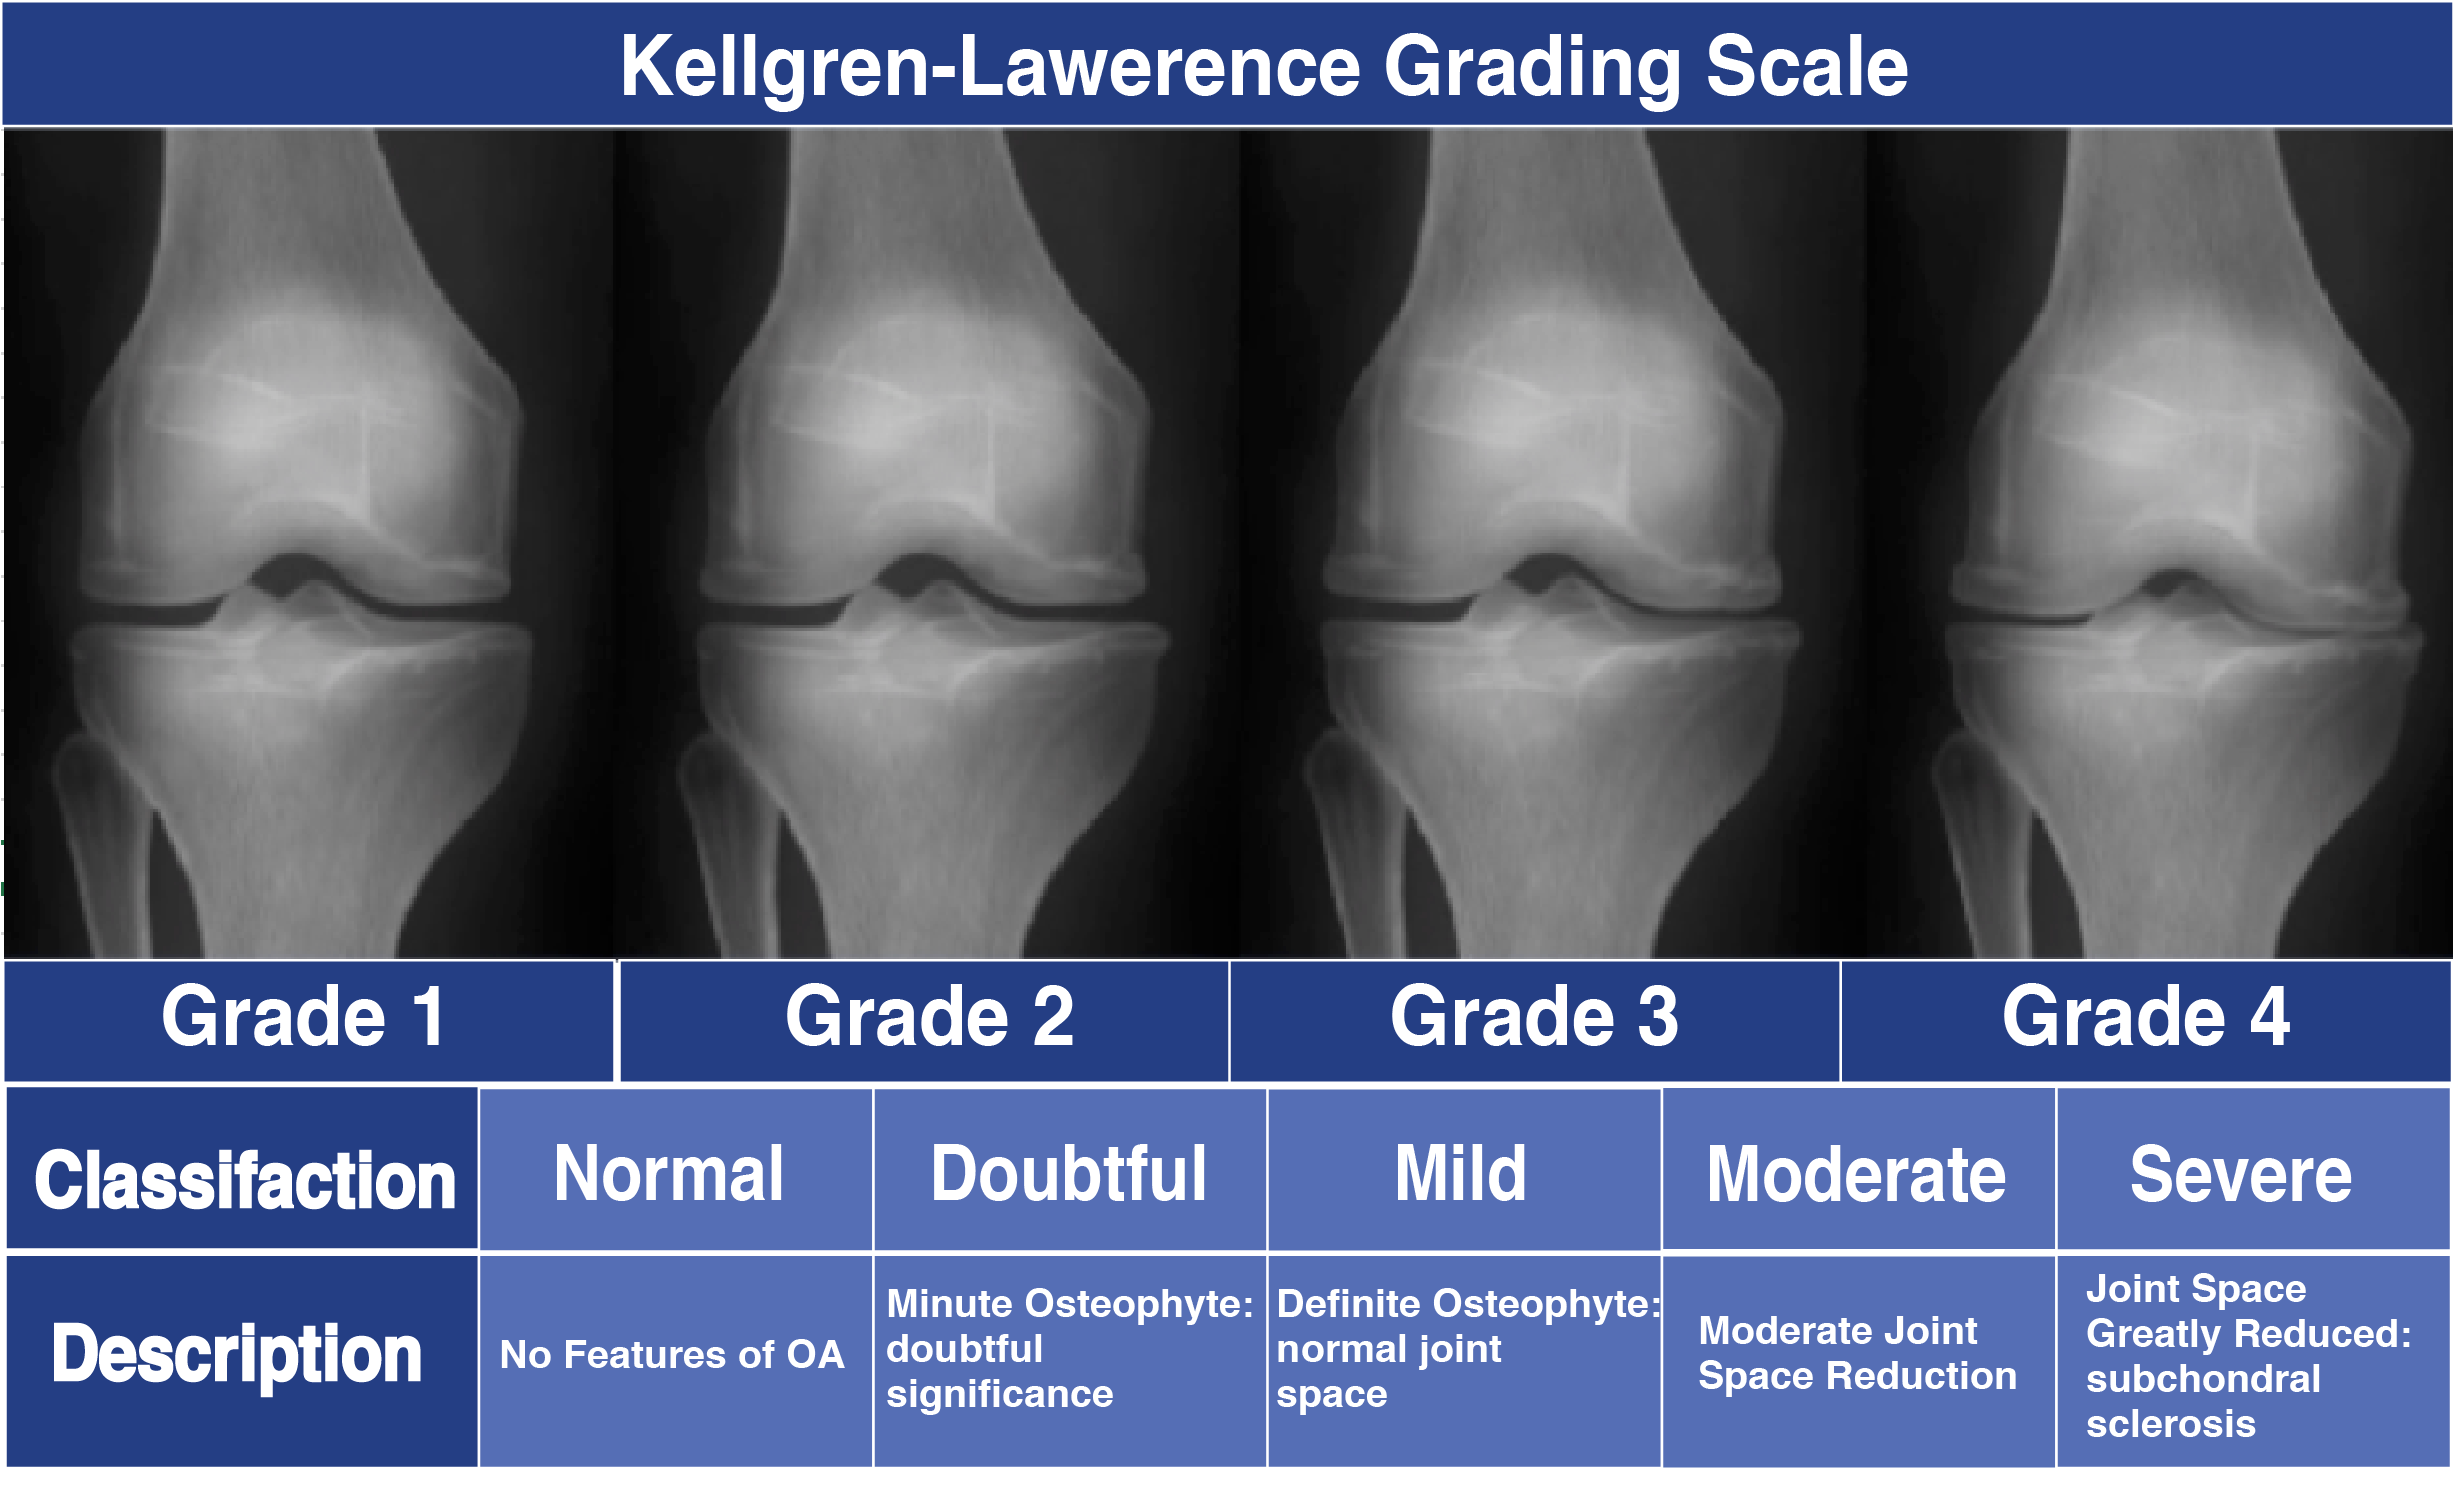 Guide To Severe Knee Arthritis Osteoarthritis Spring Loaded Technology